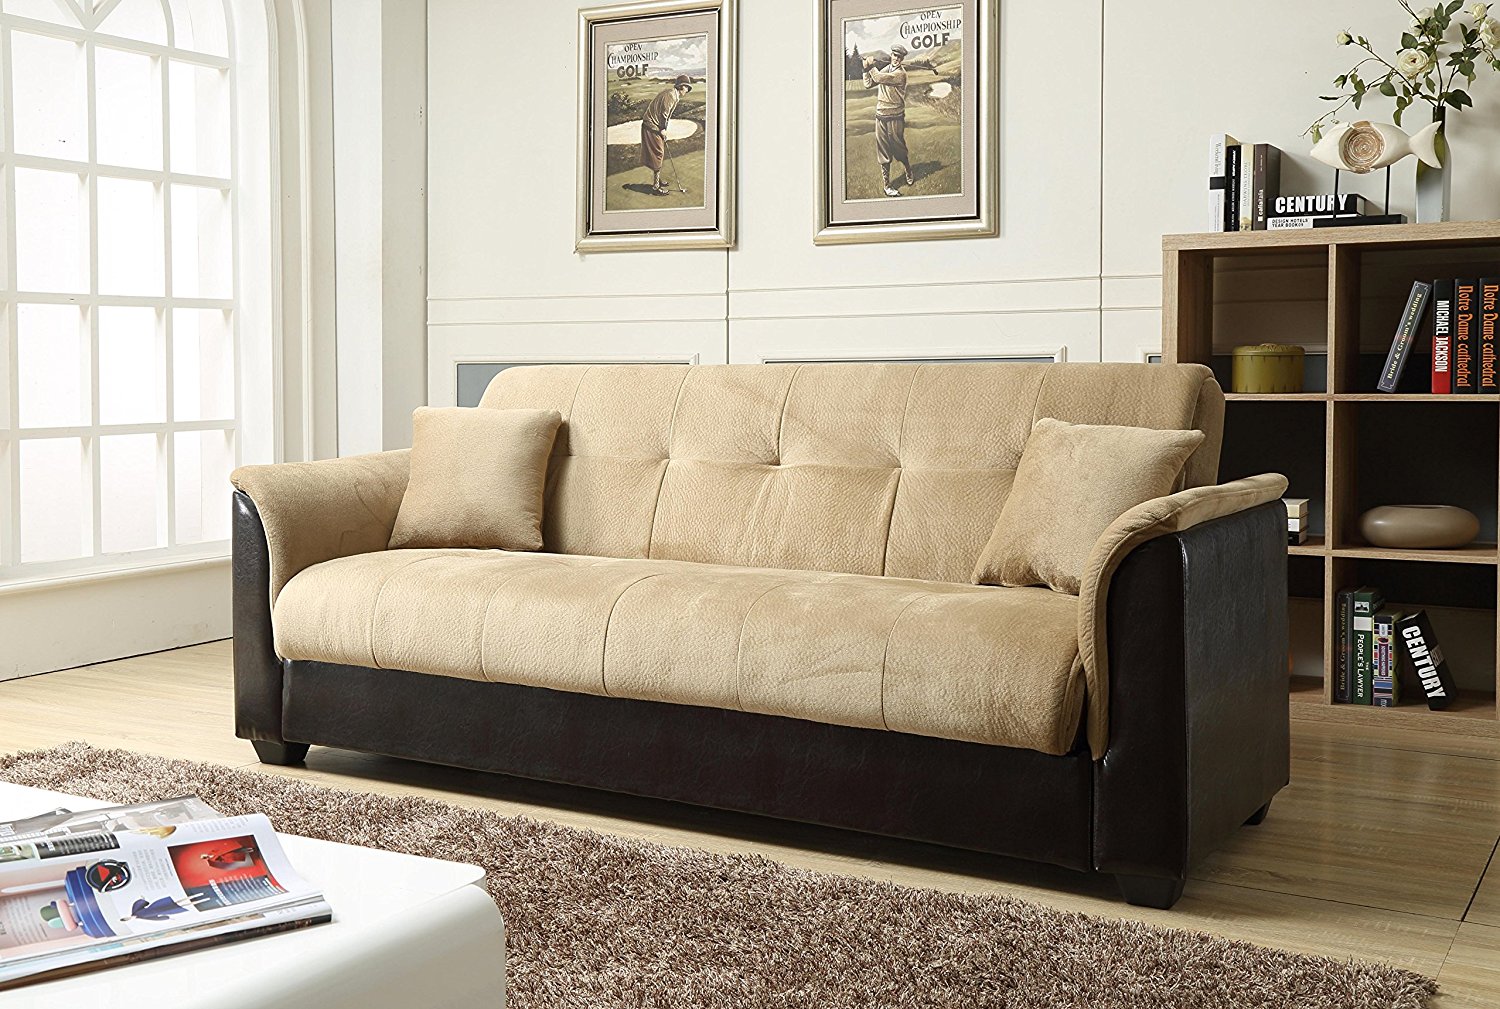 NHI Express Melanie Futon Sofa Bed with Storage, Brown